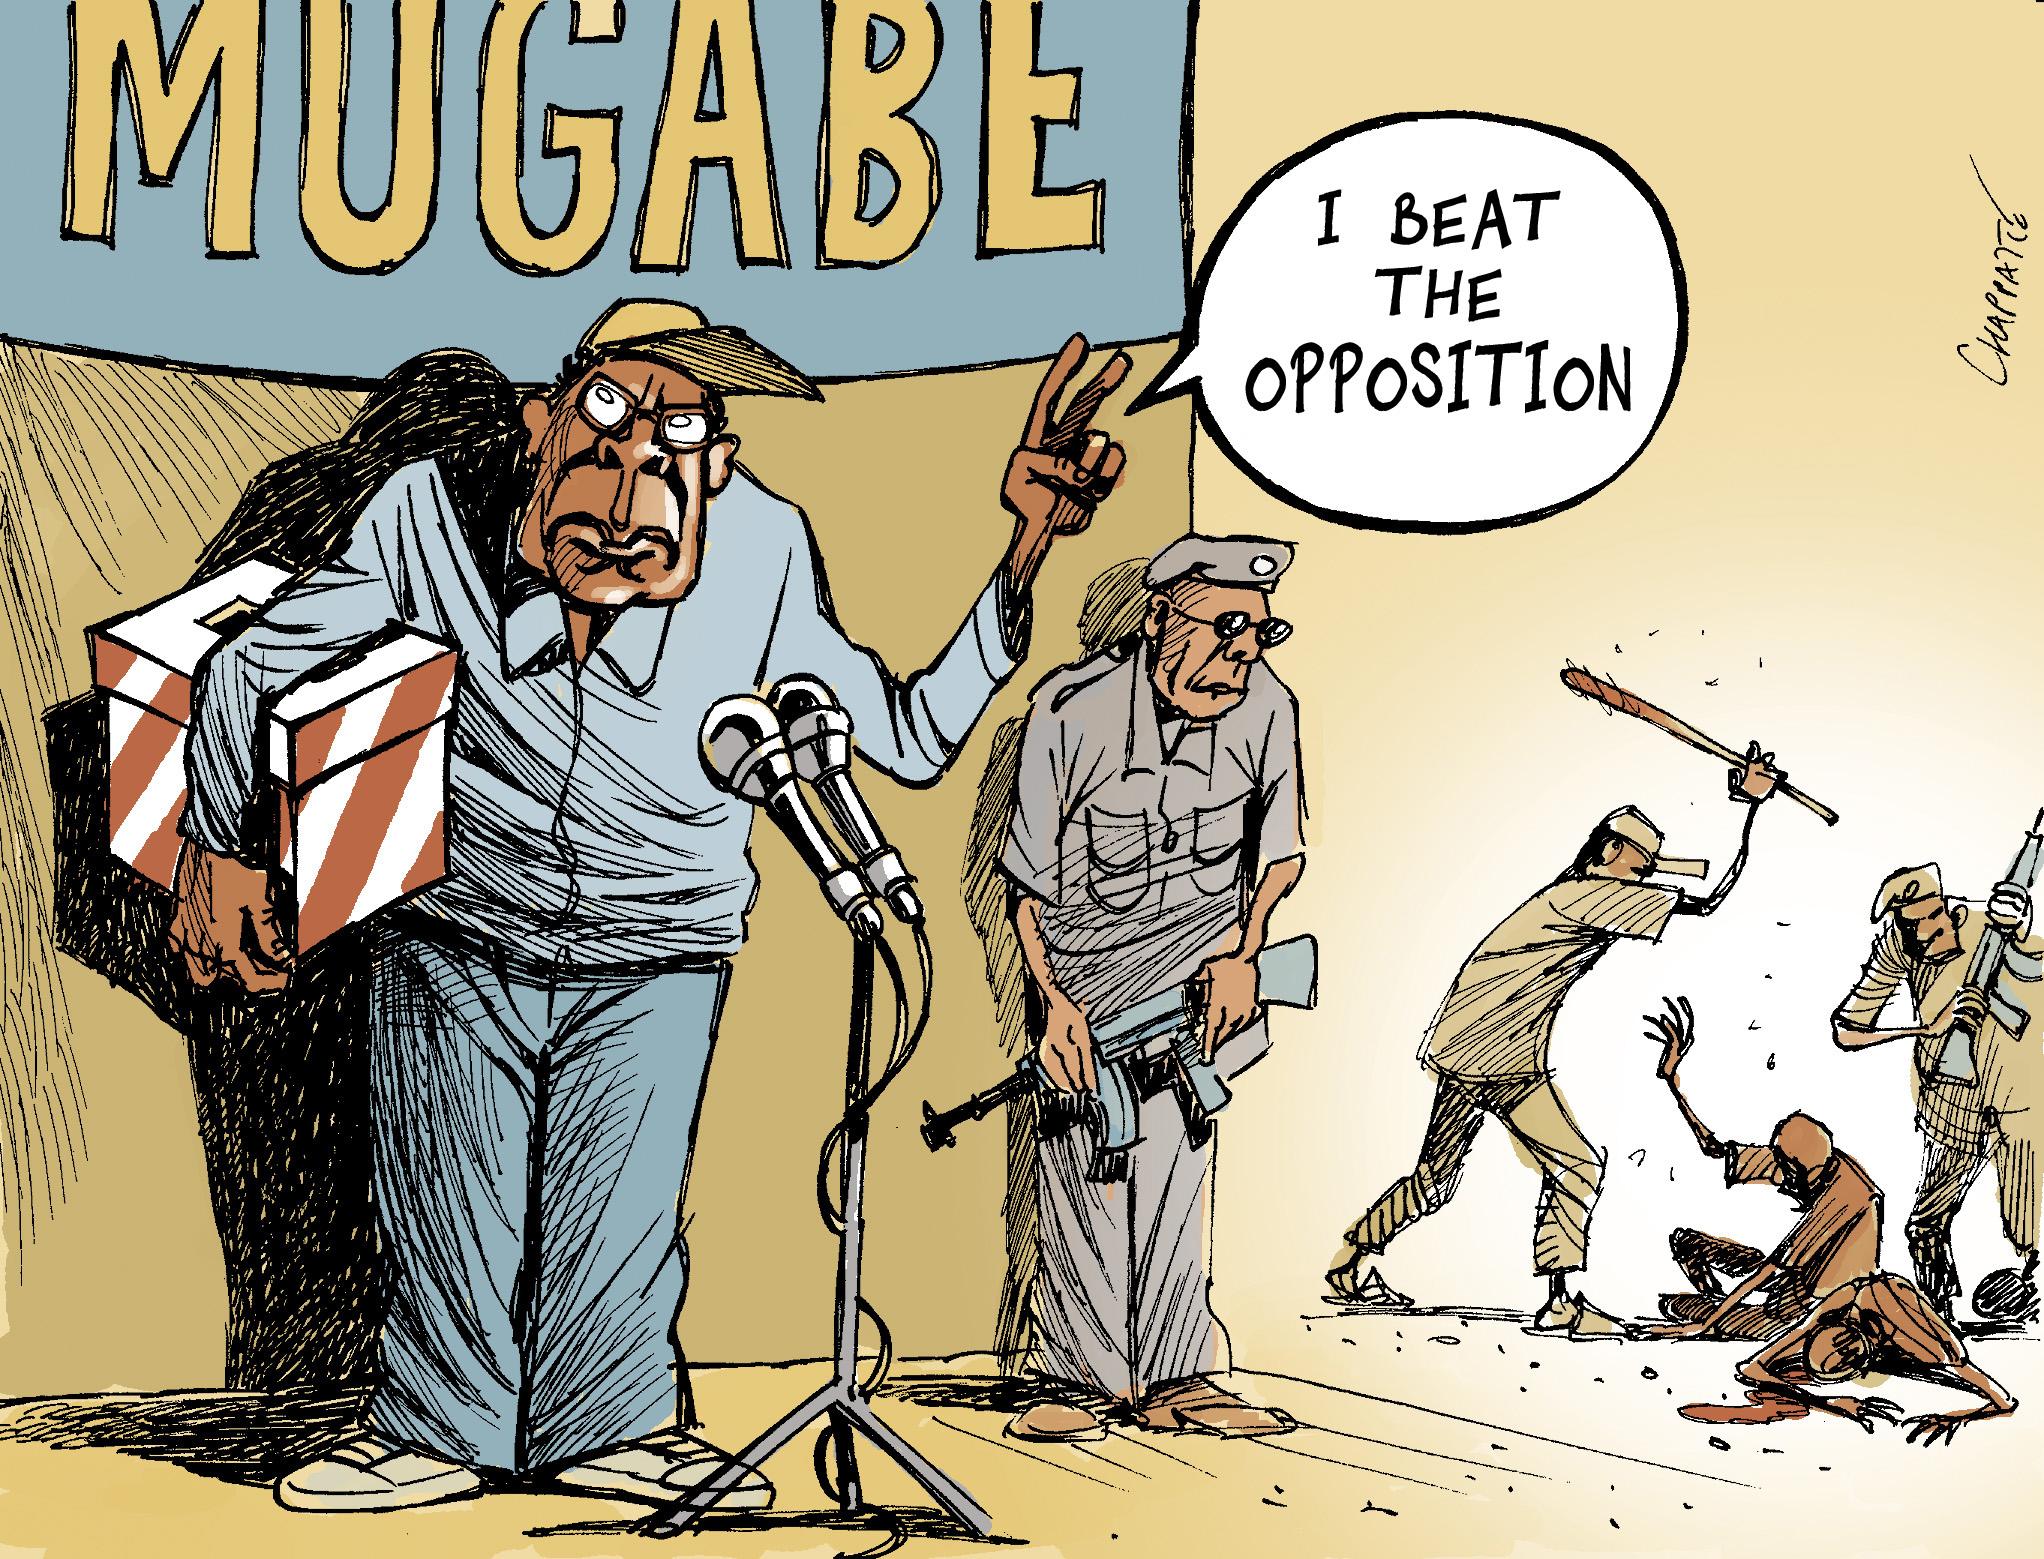 Mugabe wins